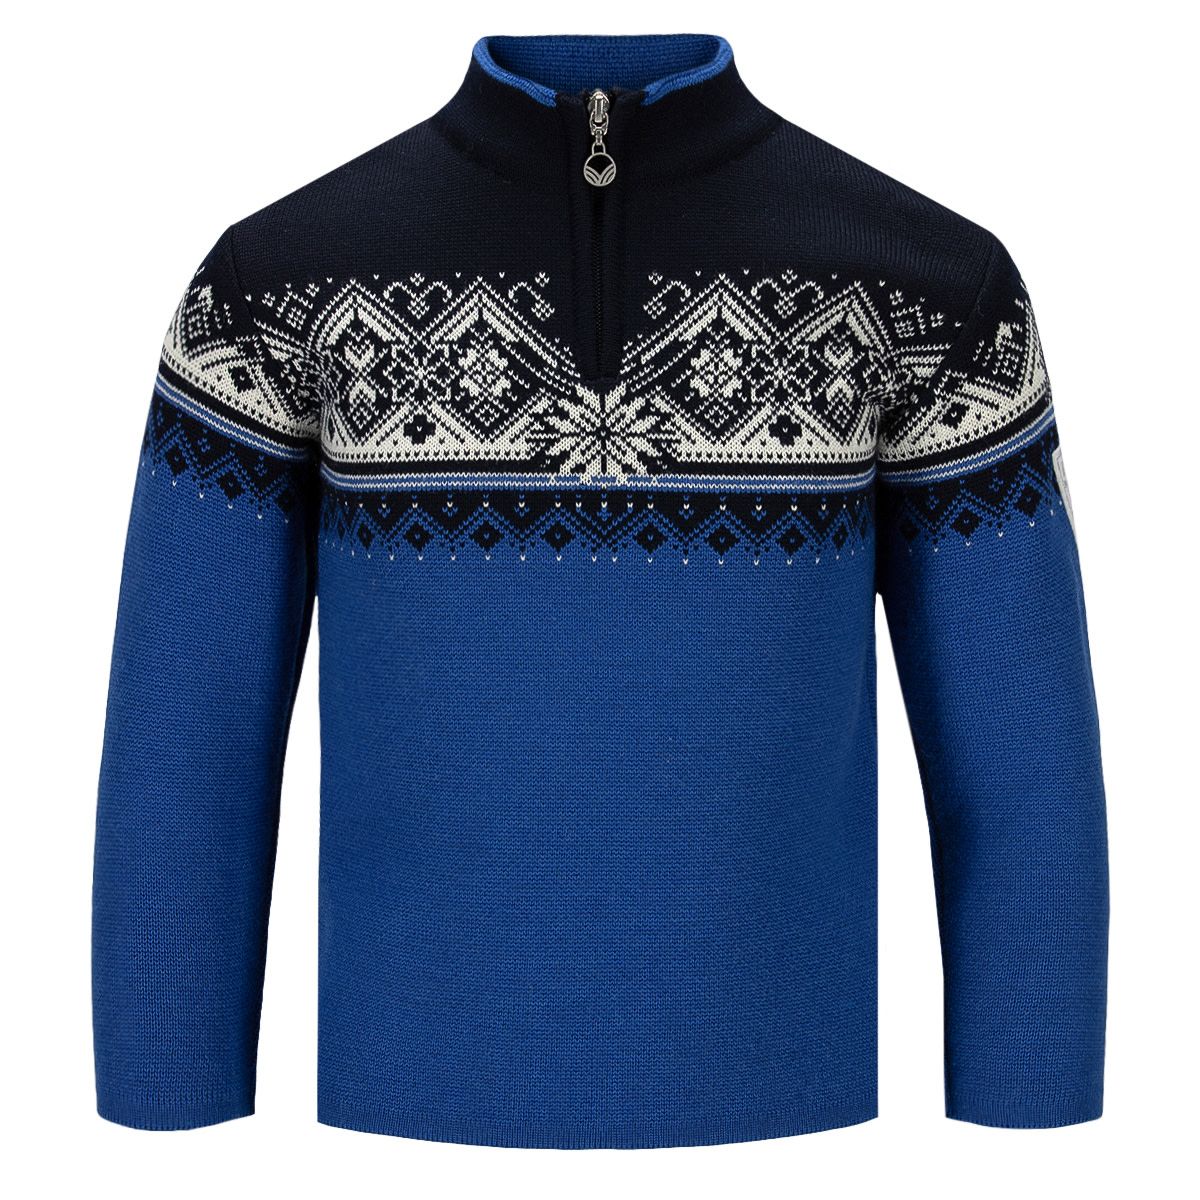 Kids' Moritz Sweater ULTRAMARINE NAVY GREY OFFWHITE